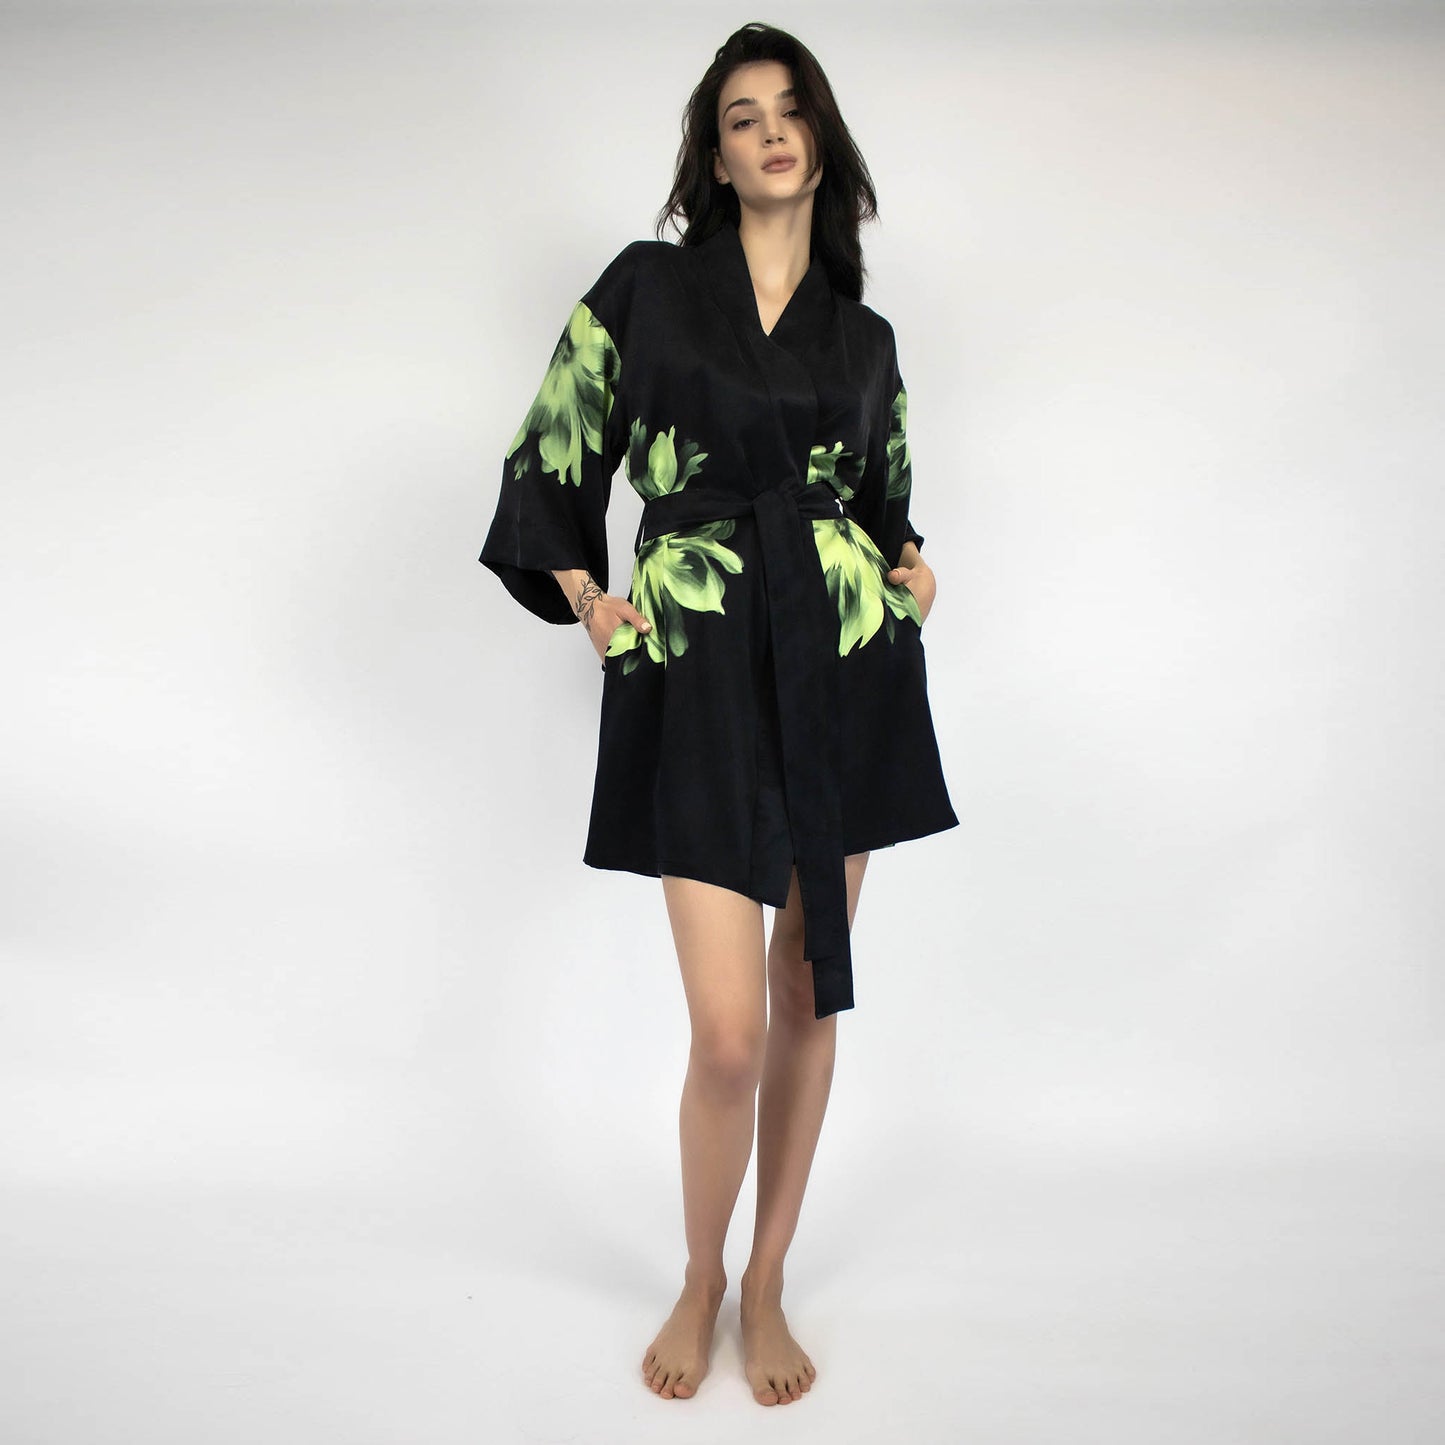 Luxury 100% silk woman's black robe